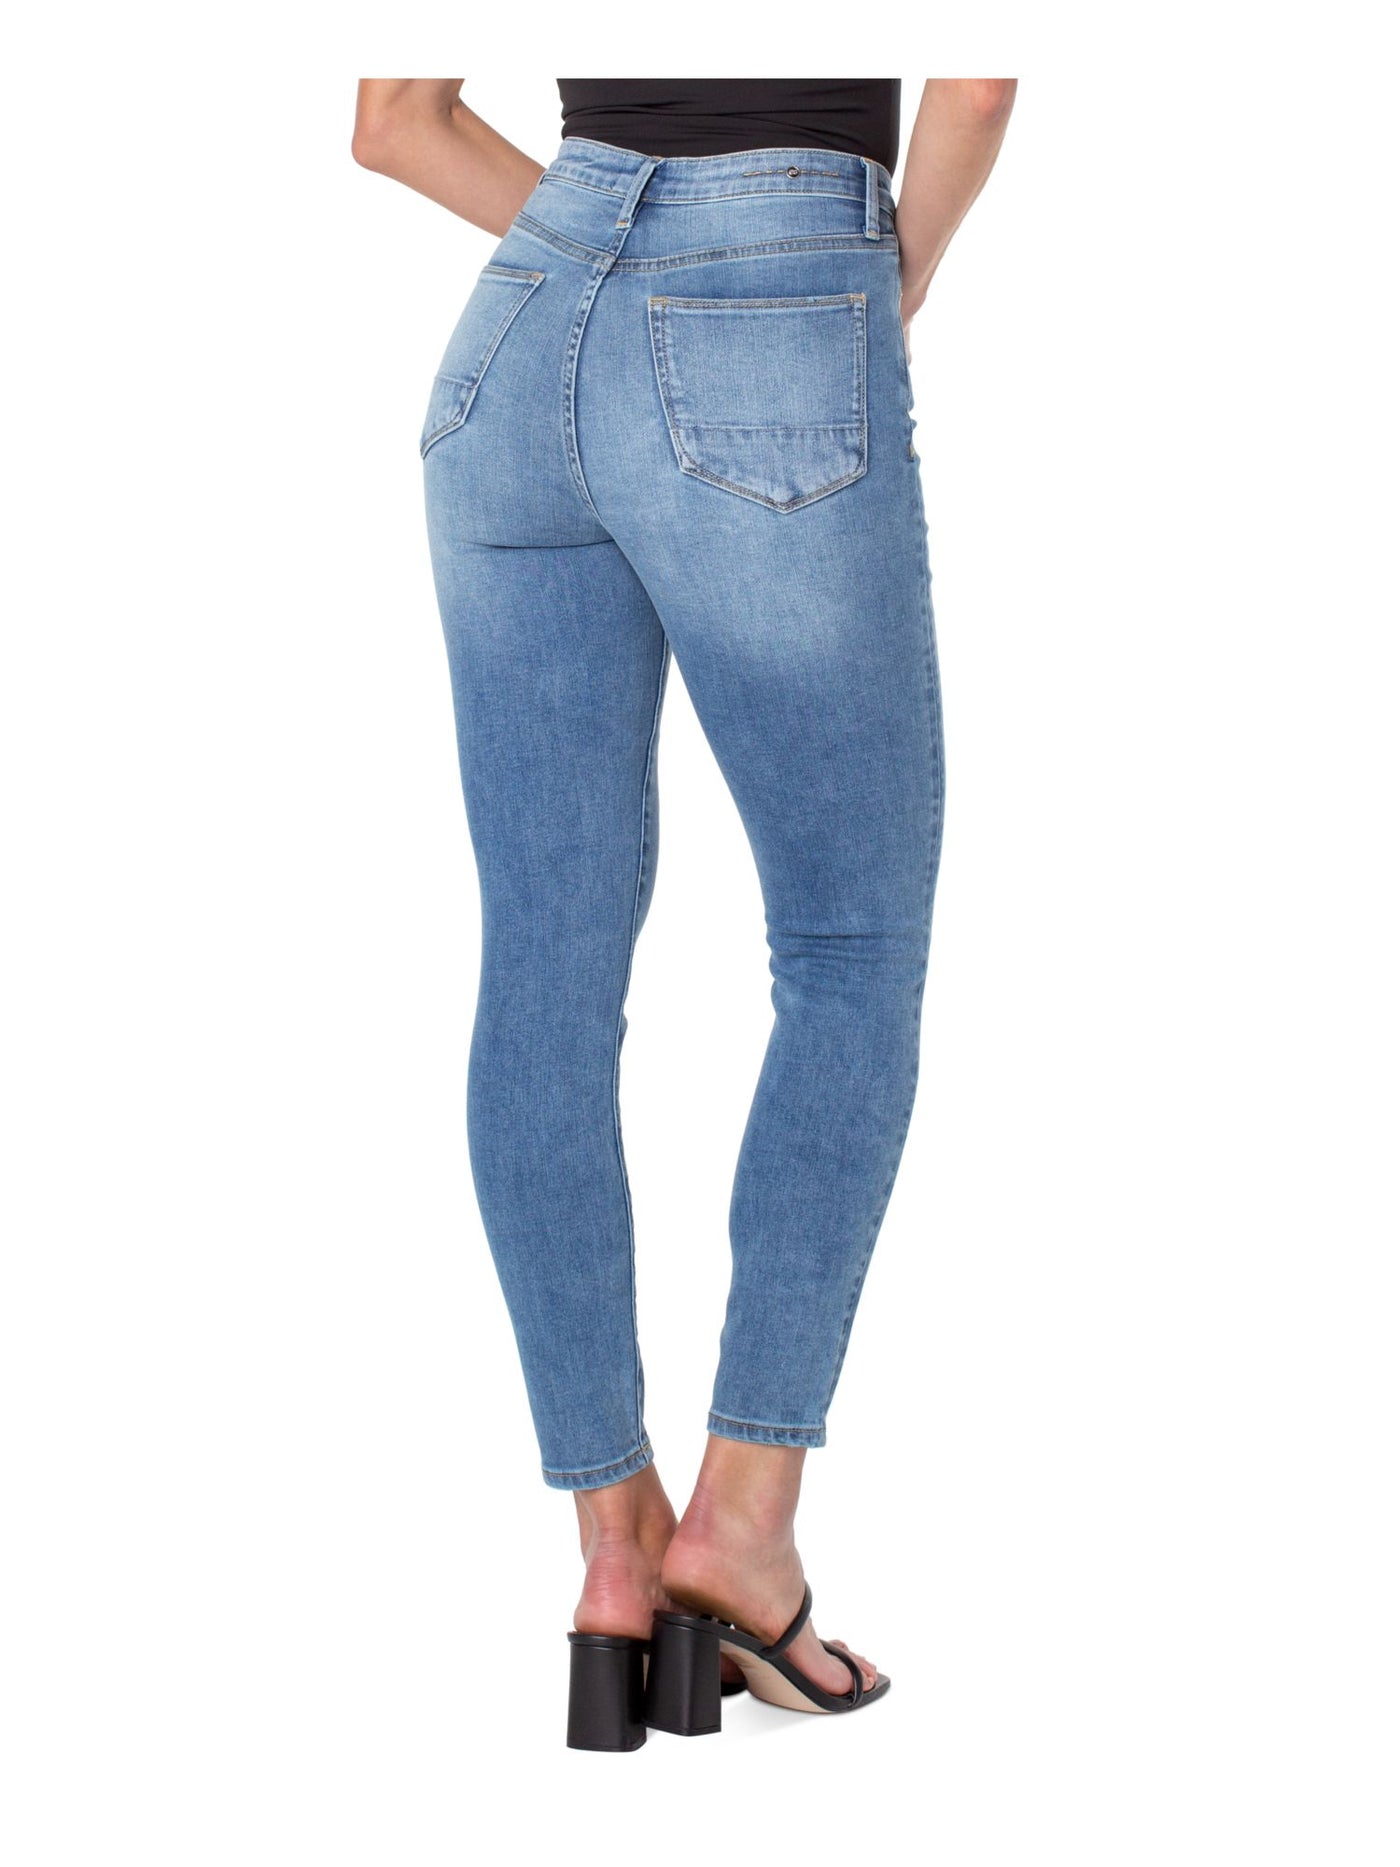 EARNEST SEWN NEW YORK Womens Blue Zippered Pocketed Skinny High Waist Jeans 25